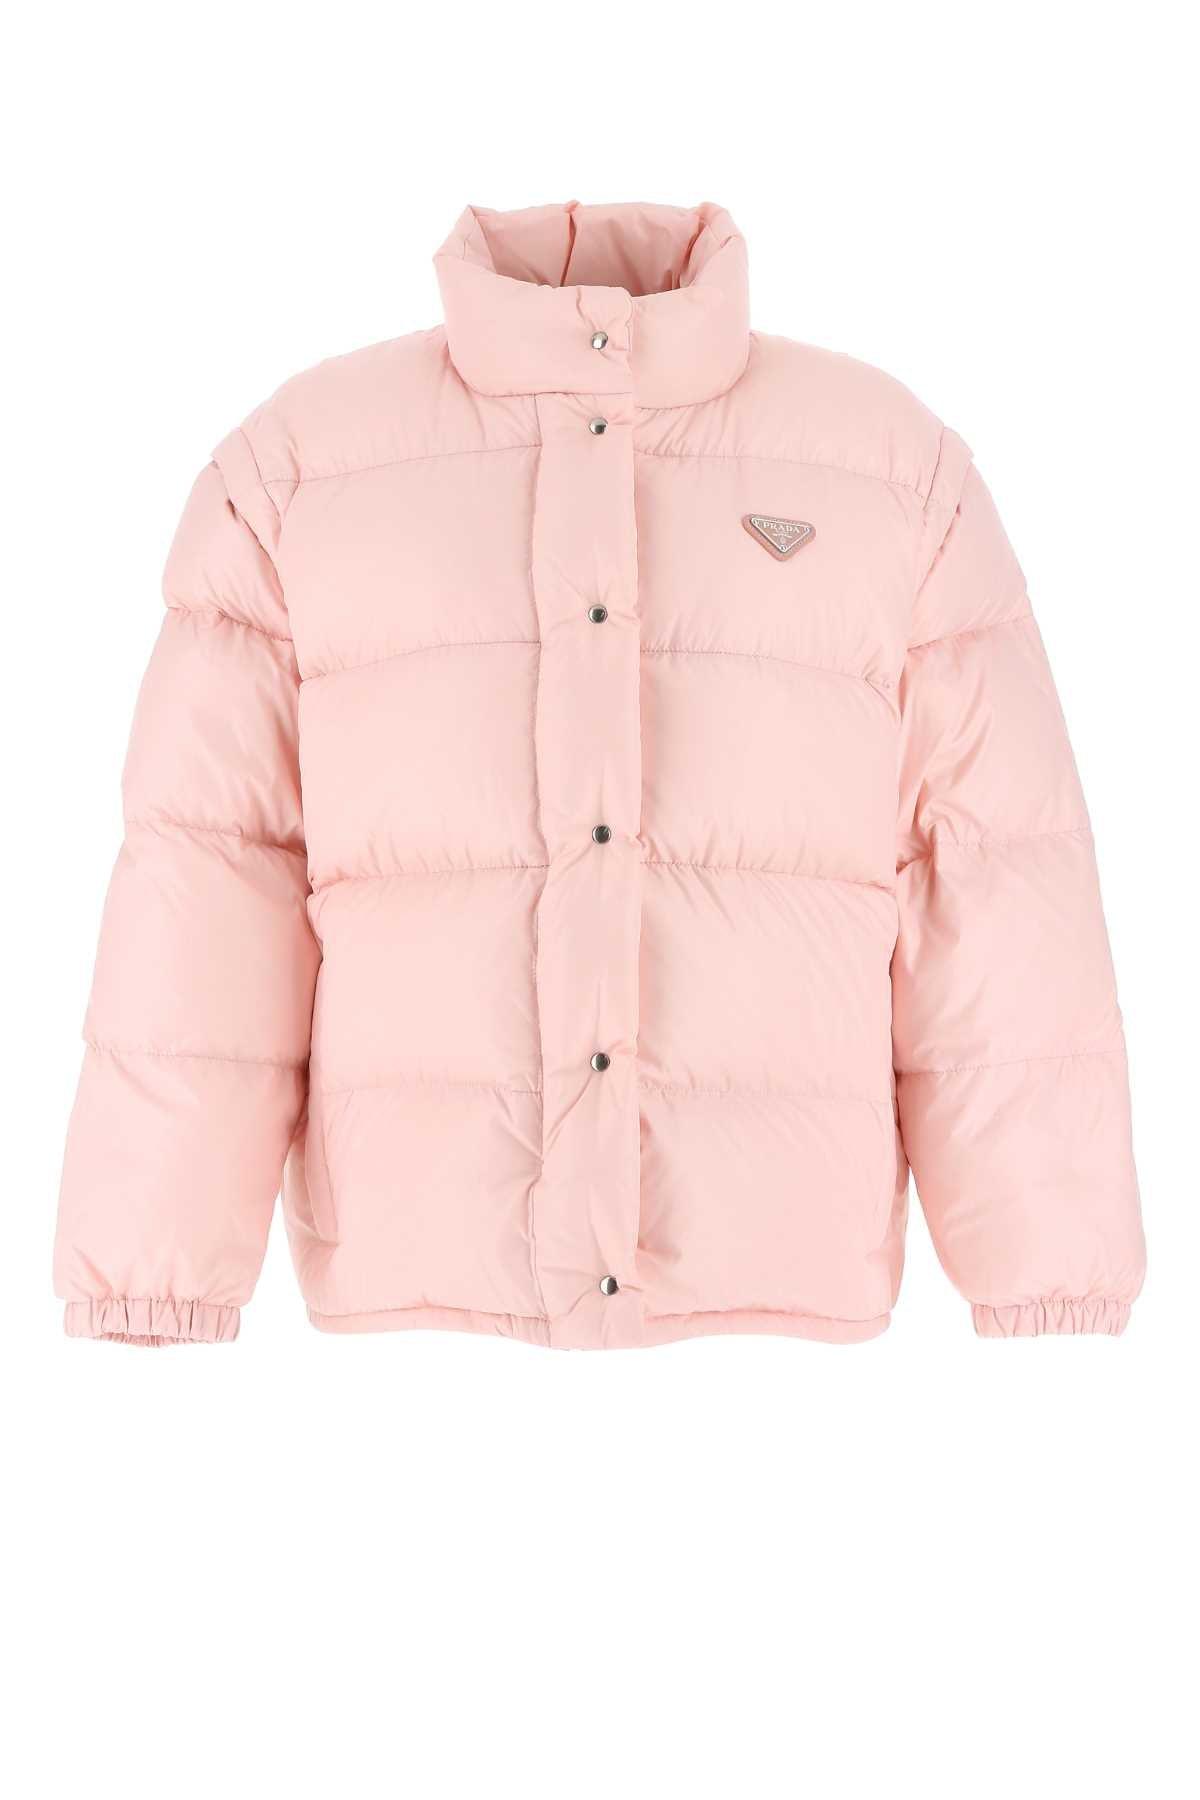 Prada Triangle Logo Puffer Down Jacket in Pink | Lyst